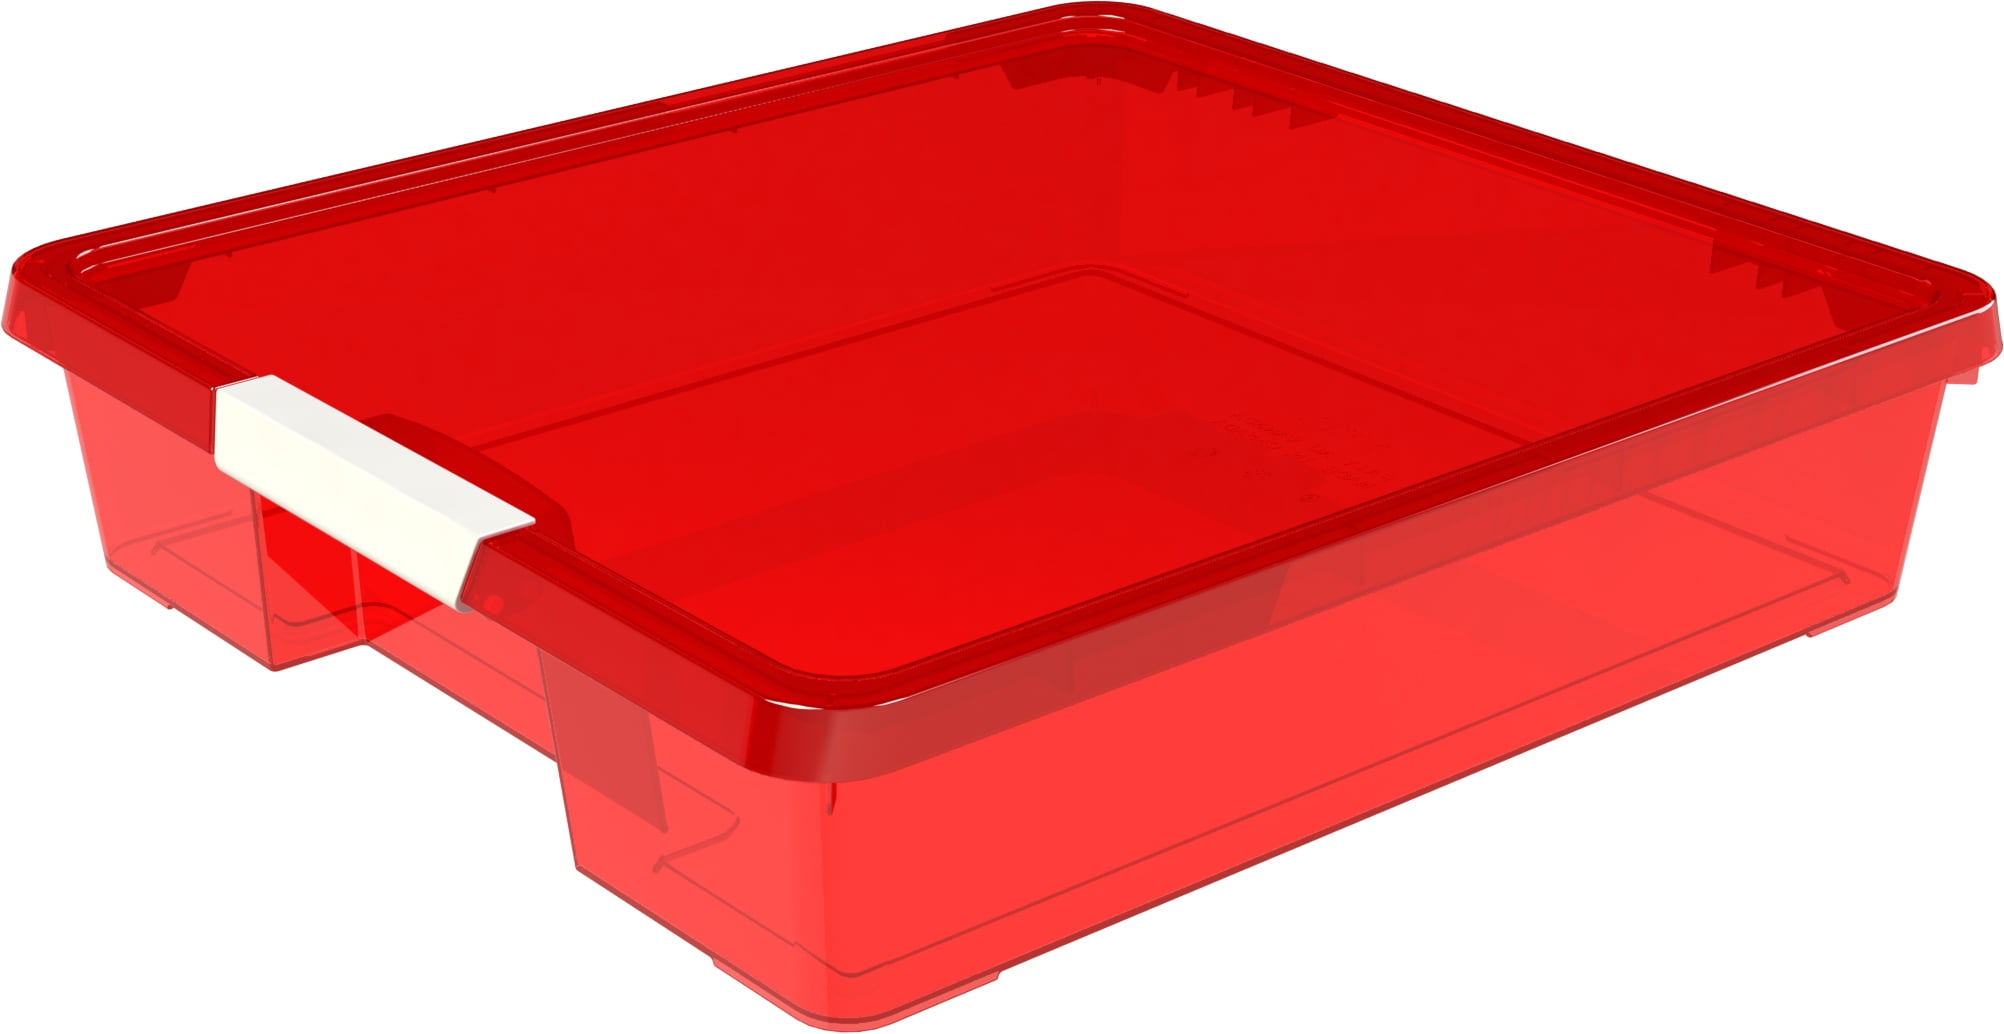 Storex Classroom Craft Project Box – Stacking Plastic Organizer Fits 12x12  Scrapbooking Paper, Purple, 5-Pack (63206U05C)